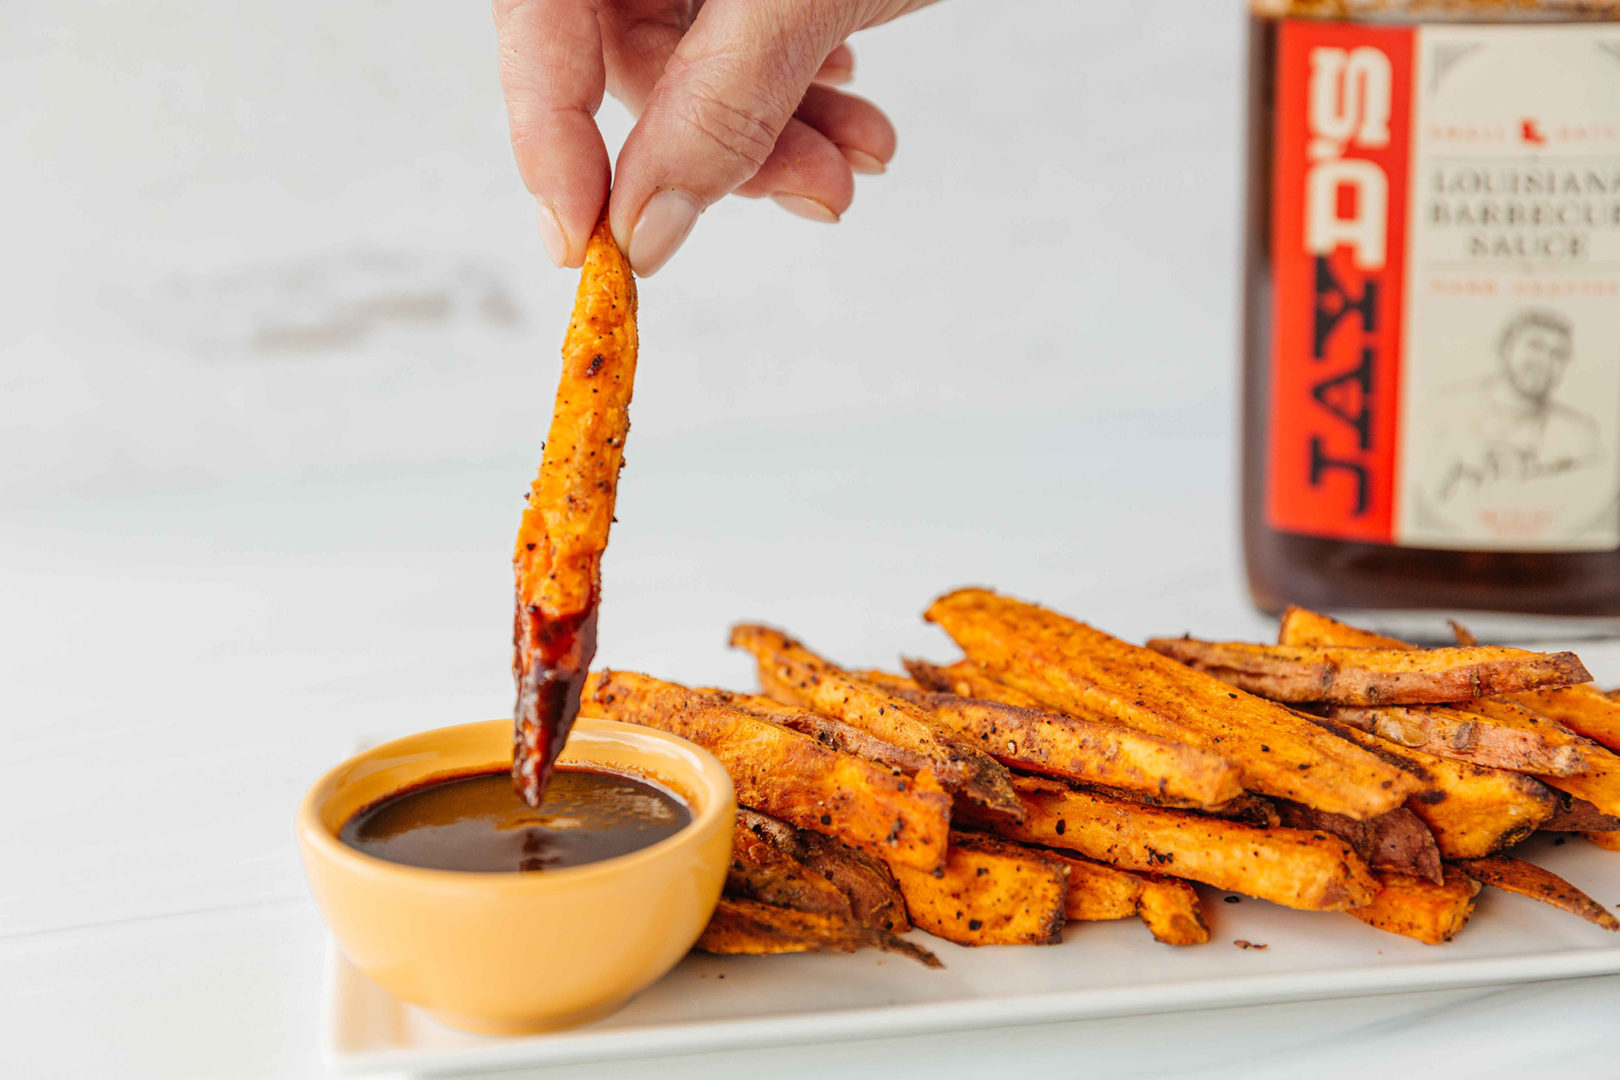 coffee sweet potato fries with bbq sauce